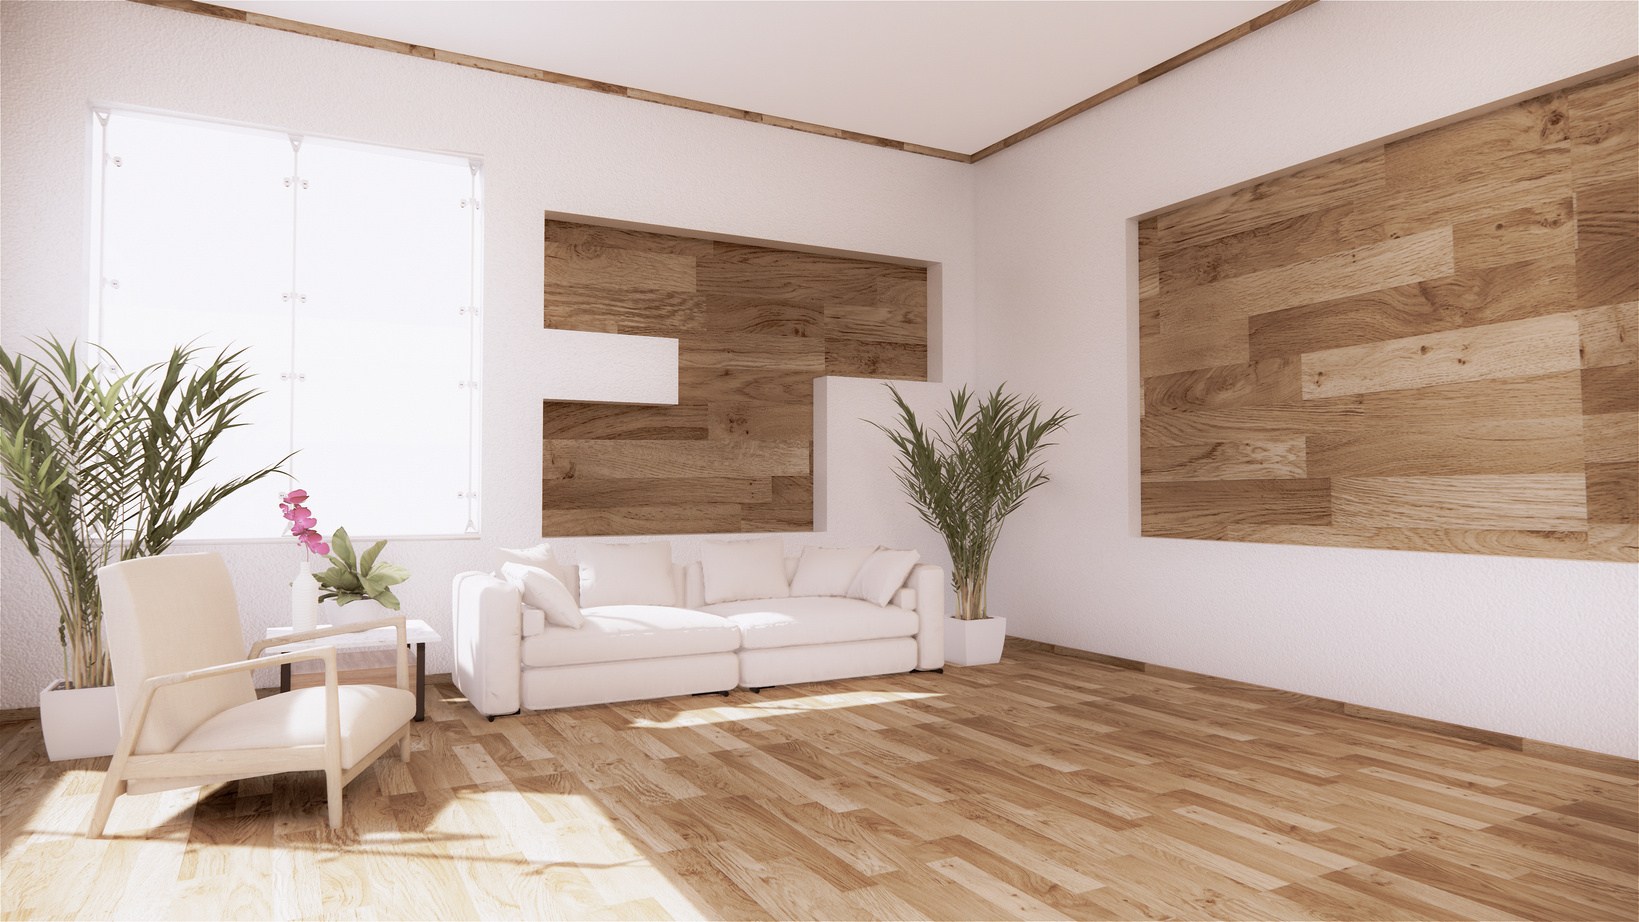 Living Room Interior with Wooden Floor